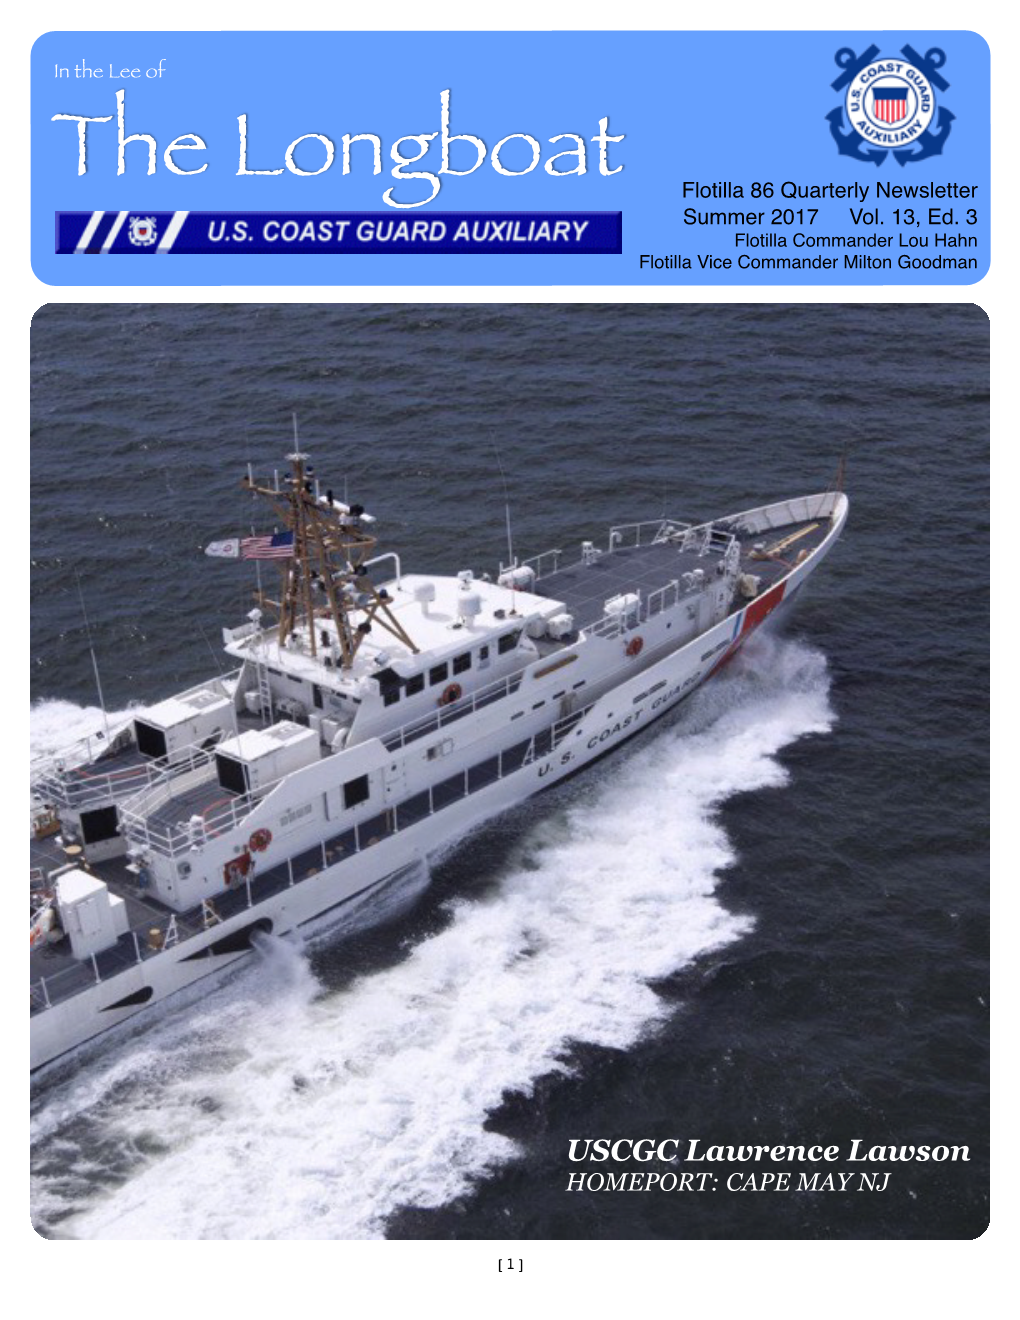 The Longboat Flotilla 86 Quarterly Newsletter Summer 2017 Vol